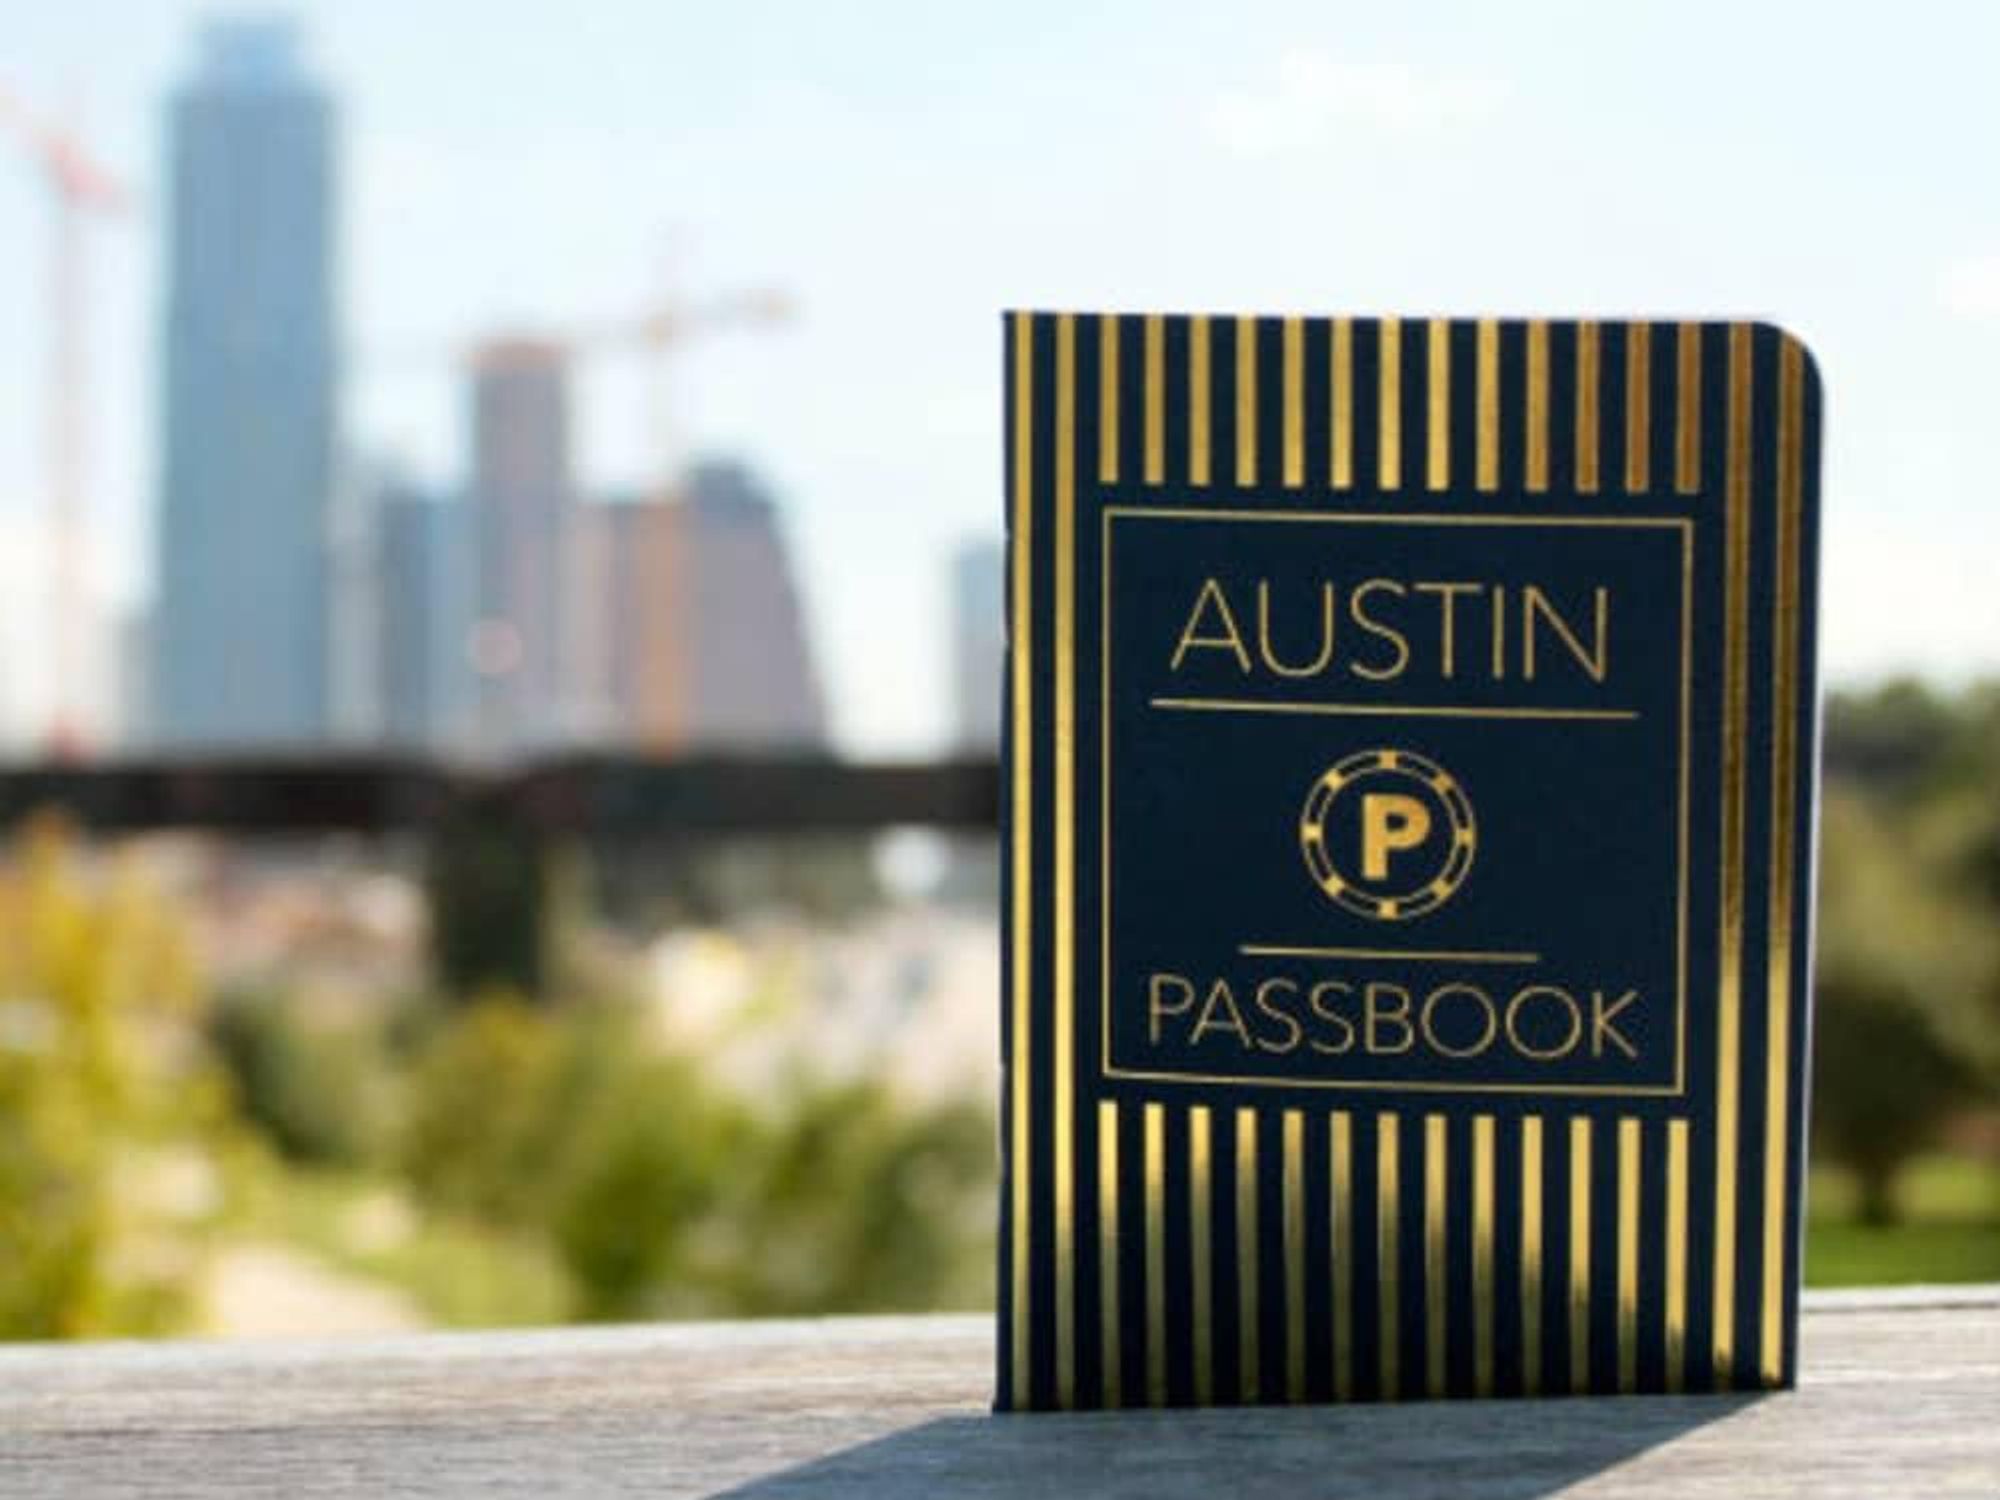 Austin Passbook